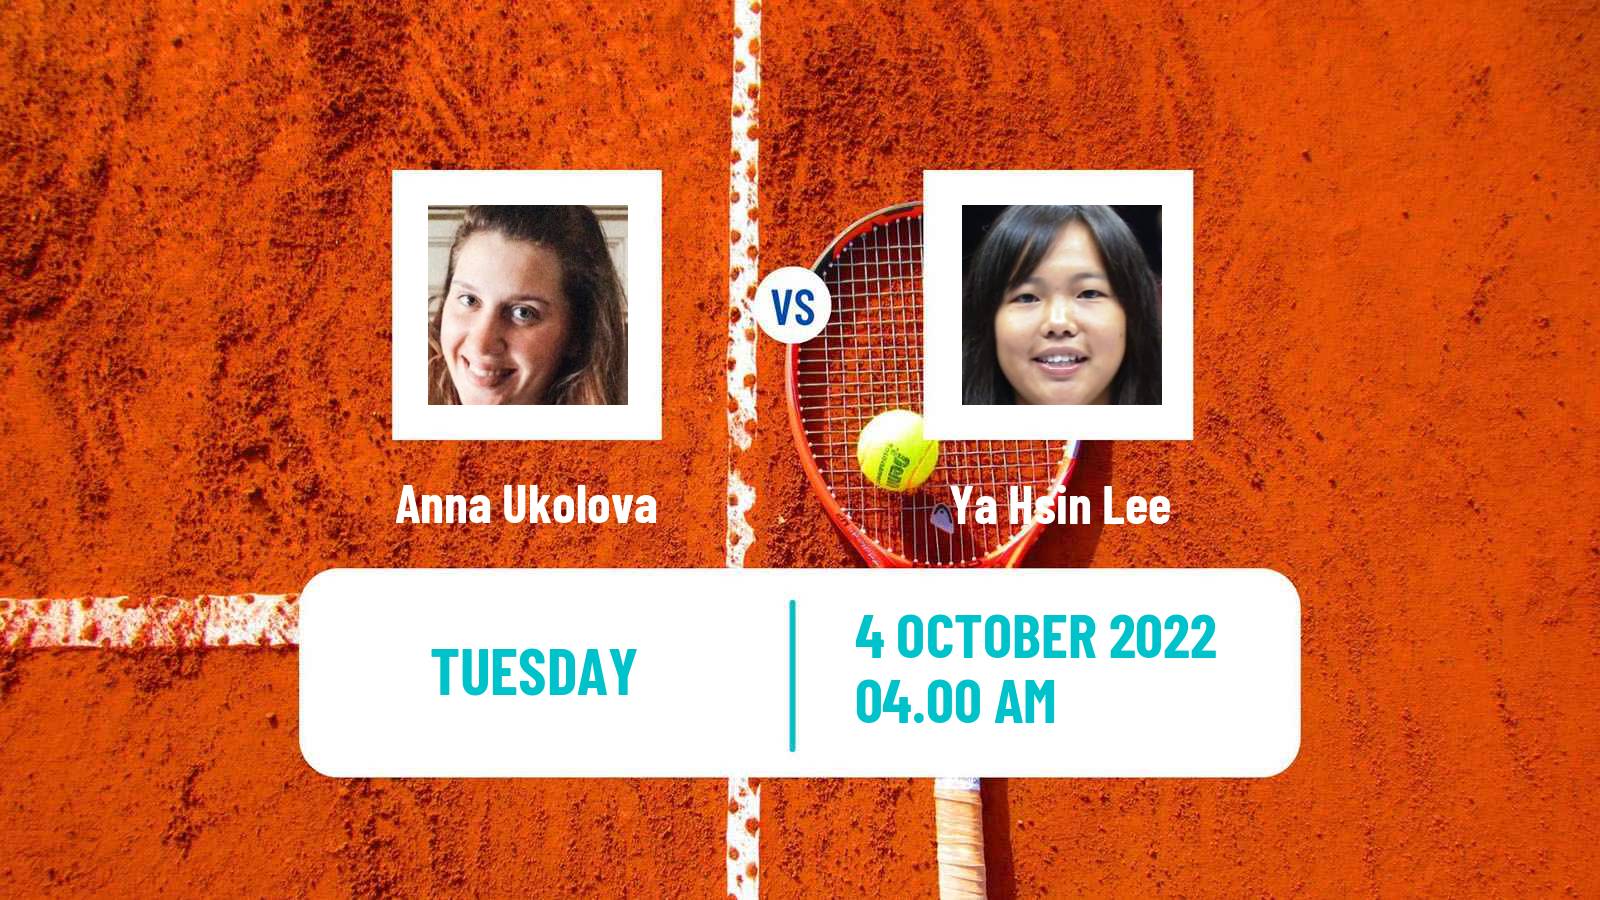 Tennis ITF Tournaments Anna Ukolova - Ya Hsin Lee